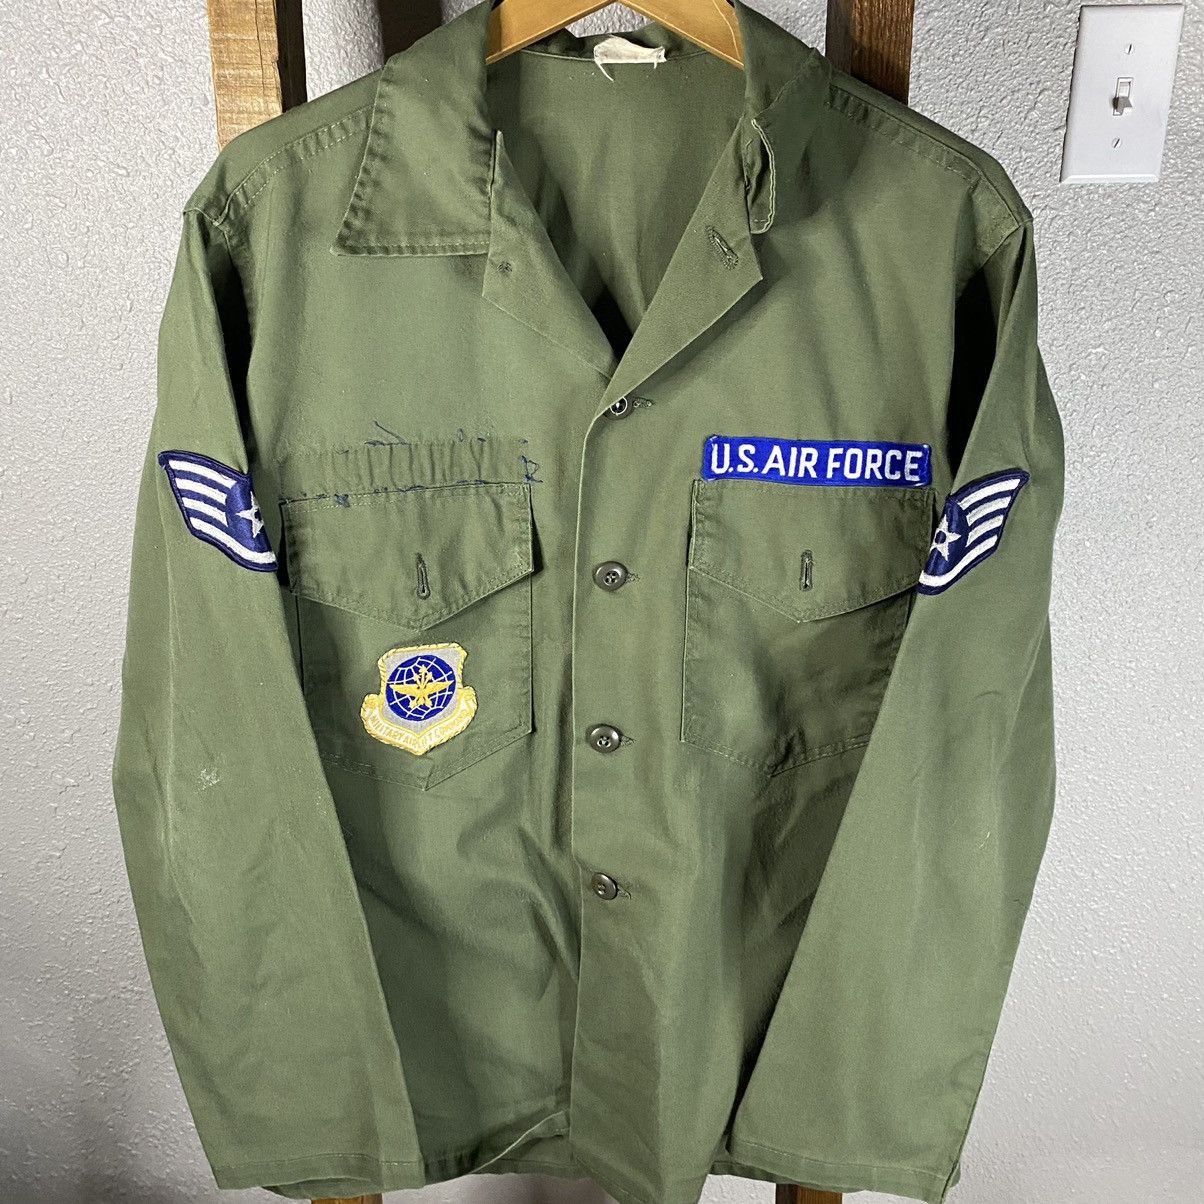 Vintage 1970s Air Force military uniform | Grailed